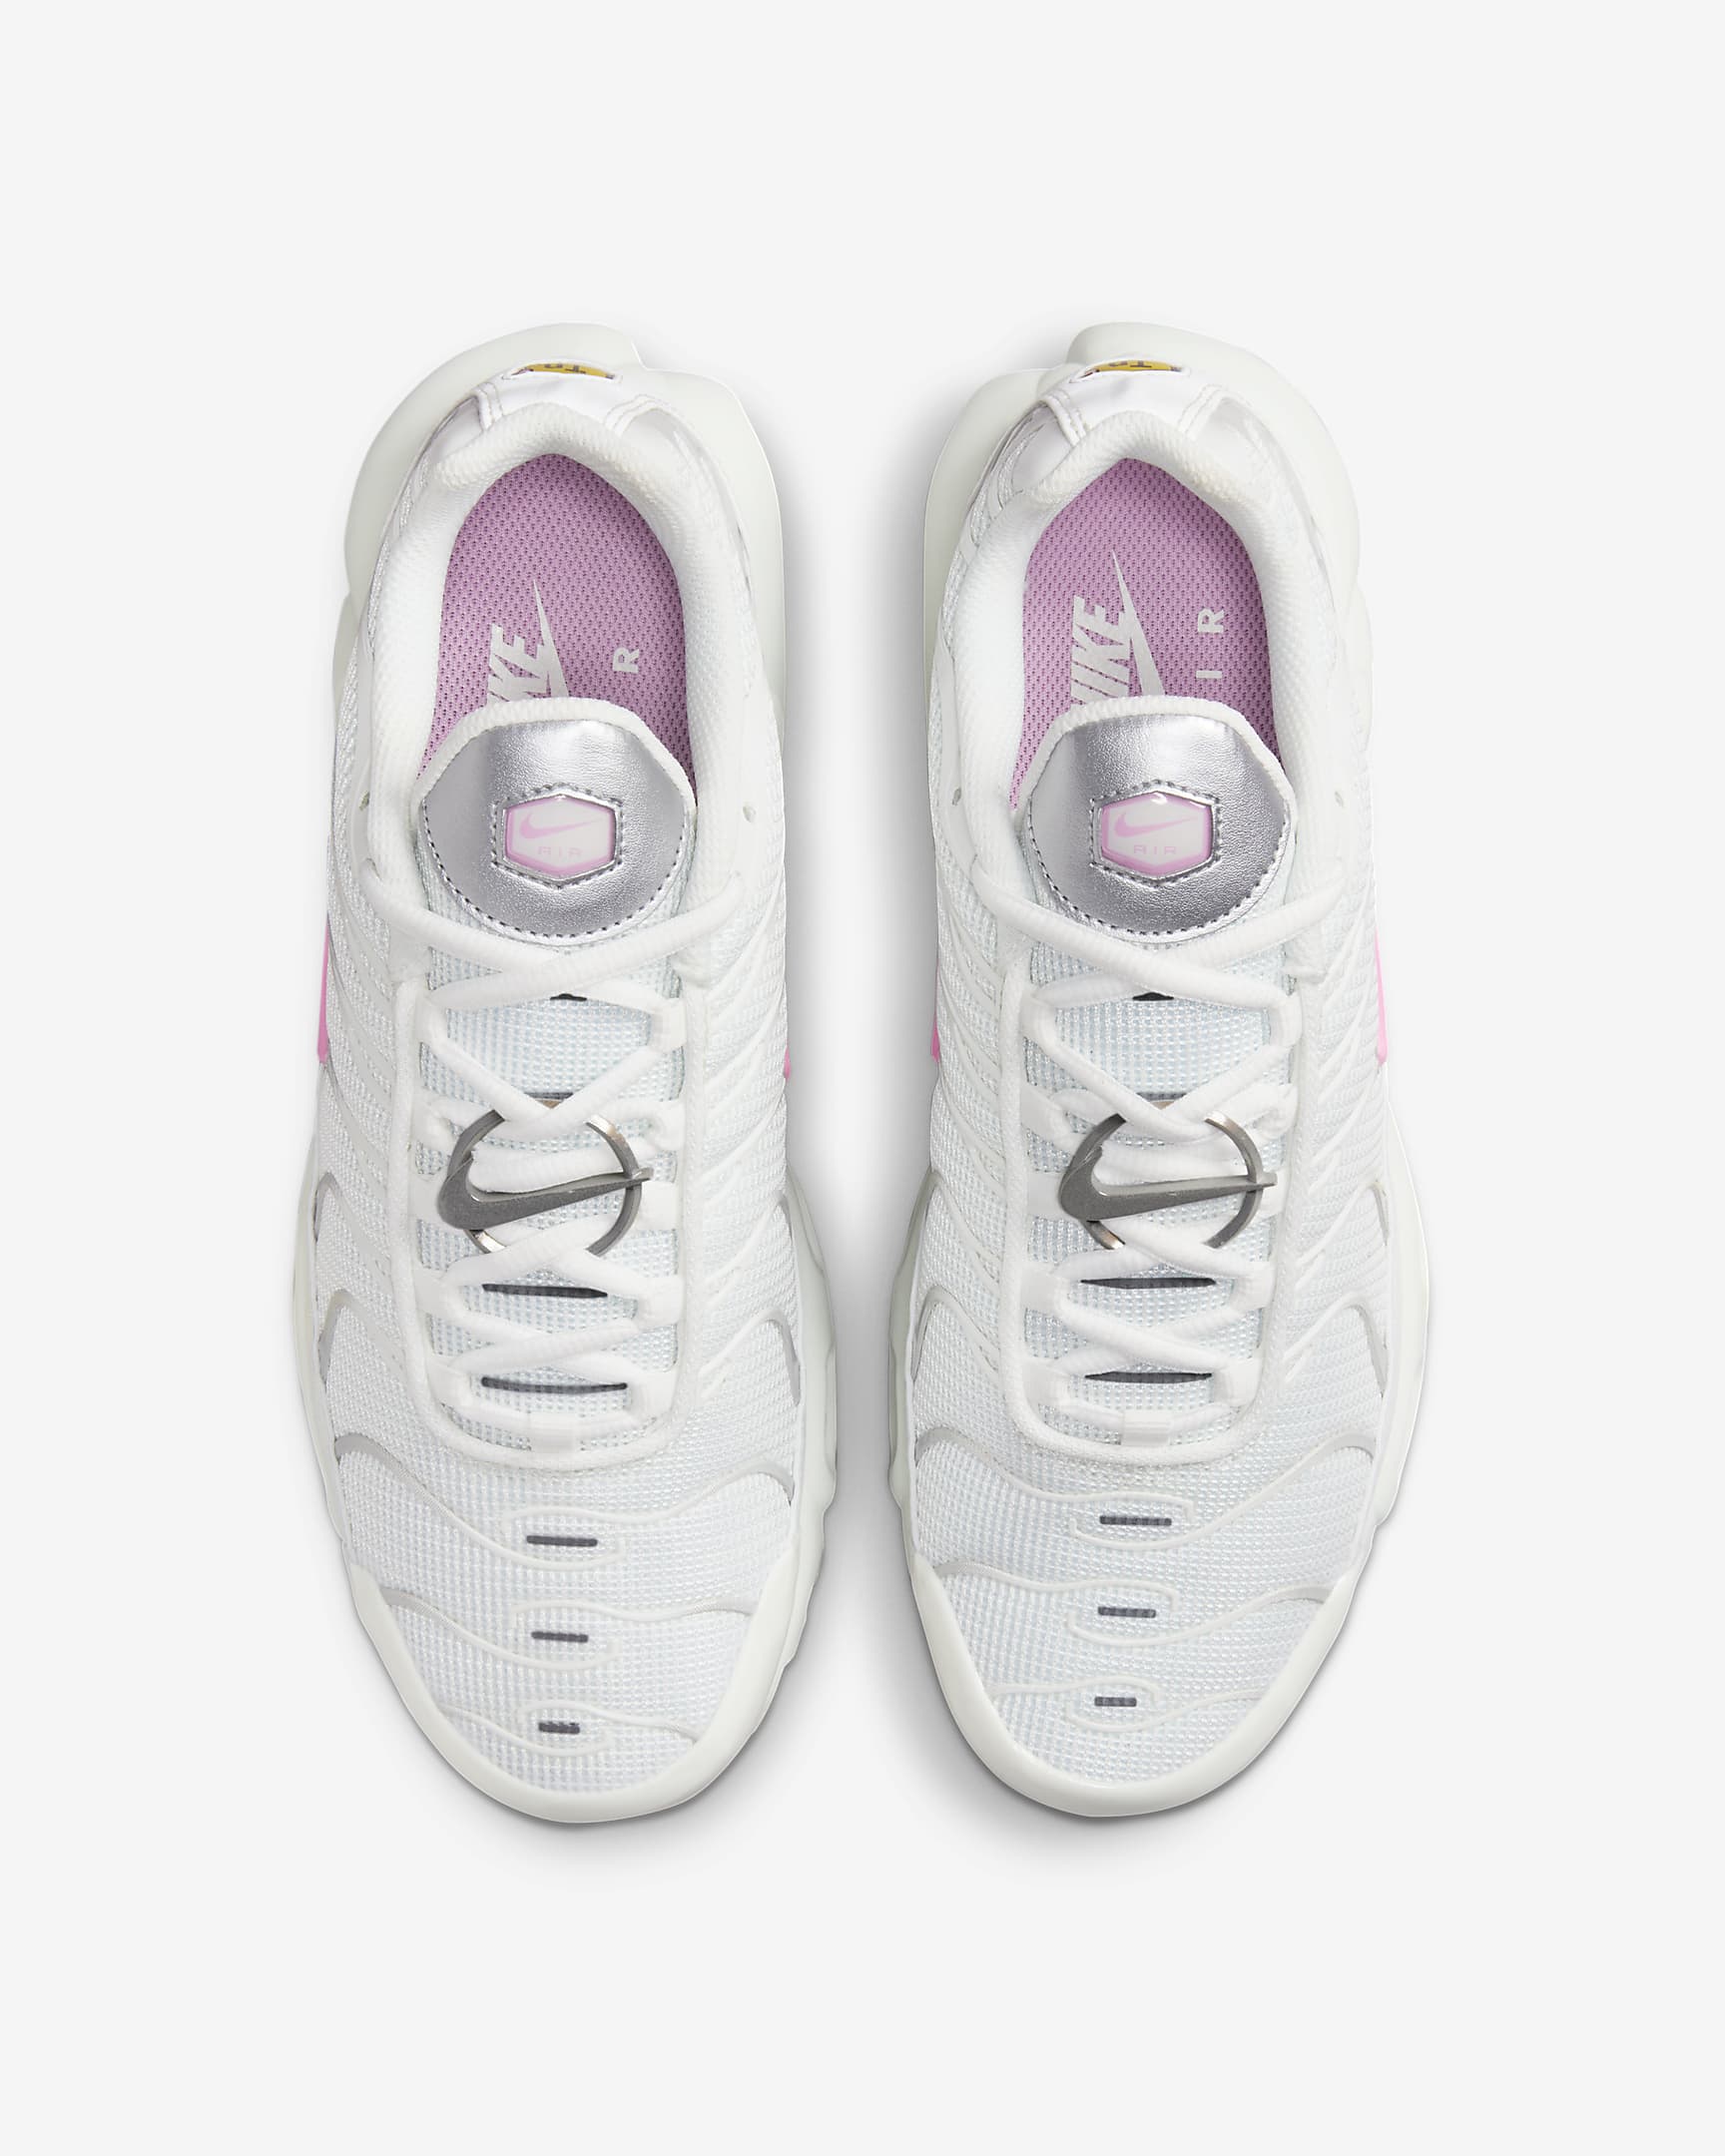 Nike Air Max Plus Women's Shoes - Summit White/Grey Fog/Metallic Silver/Pink Rise